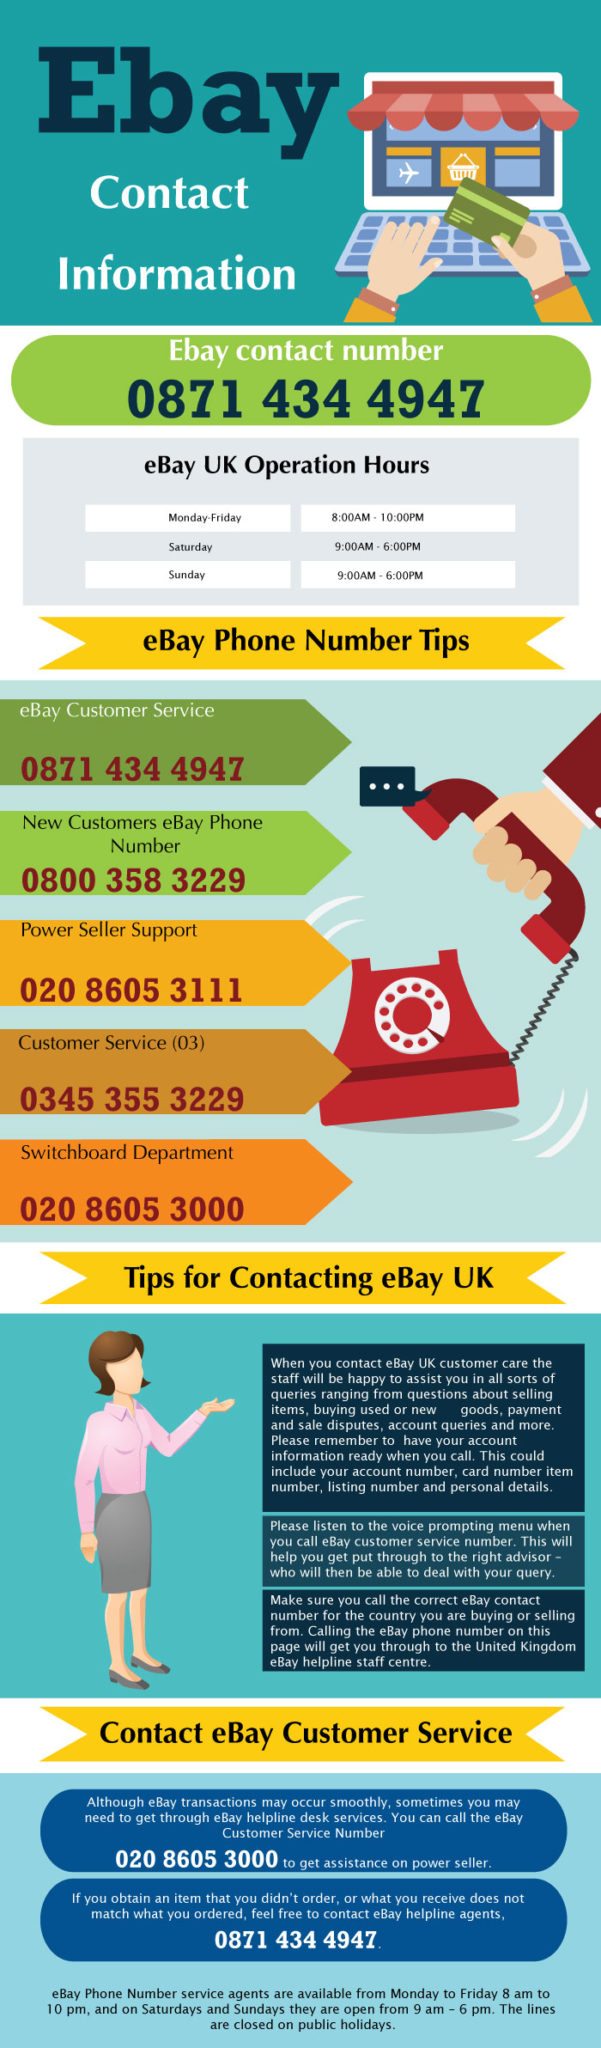 Ebay Customer Service Contact Number - 08443069177 - Helpdesk